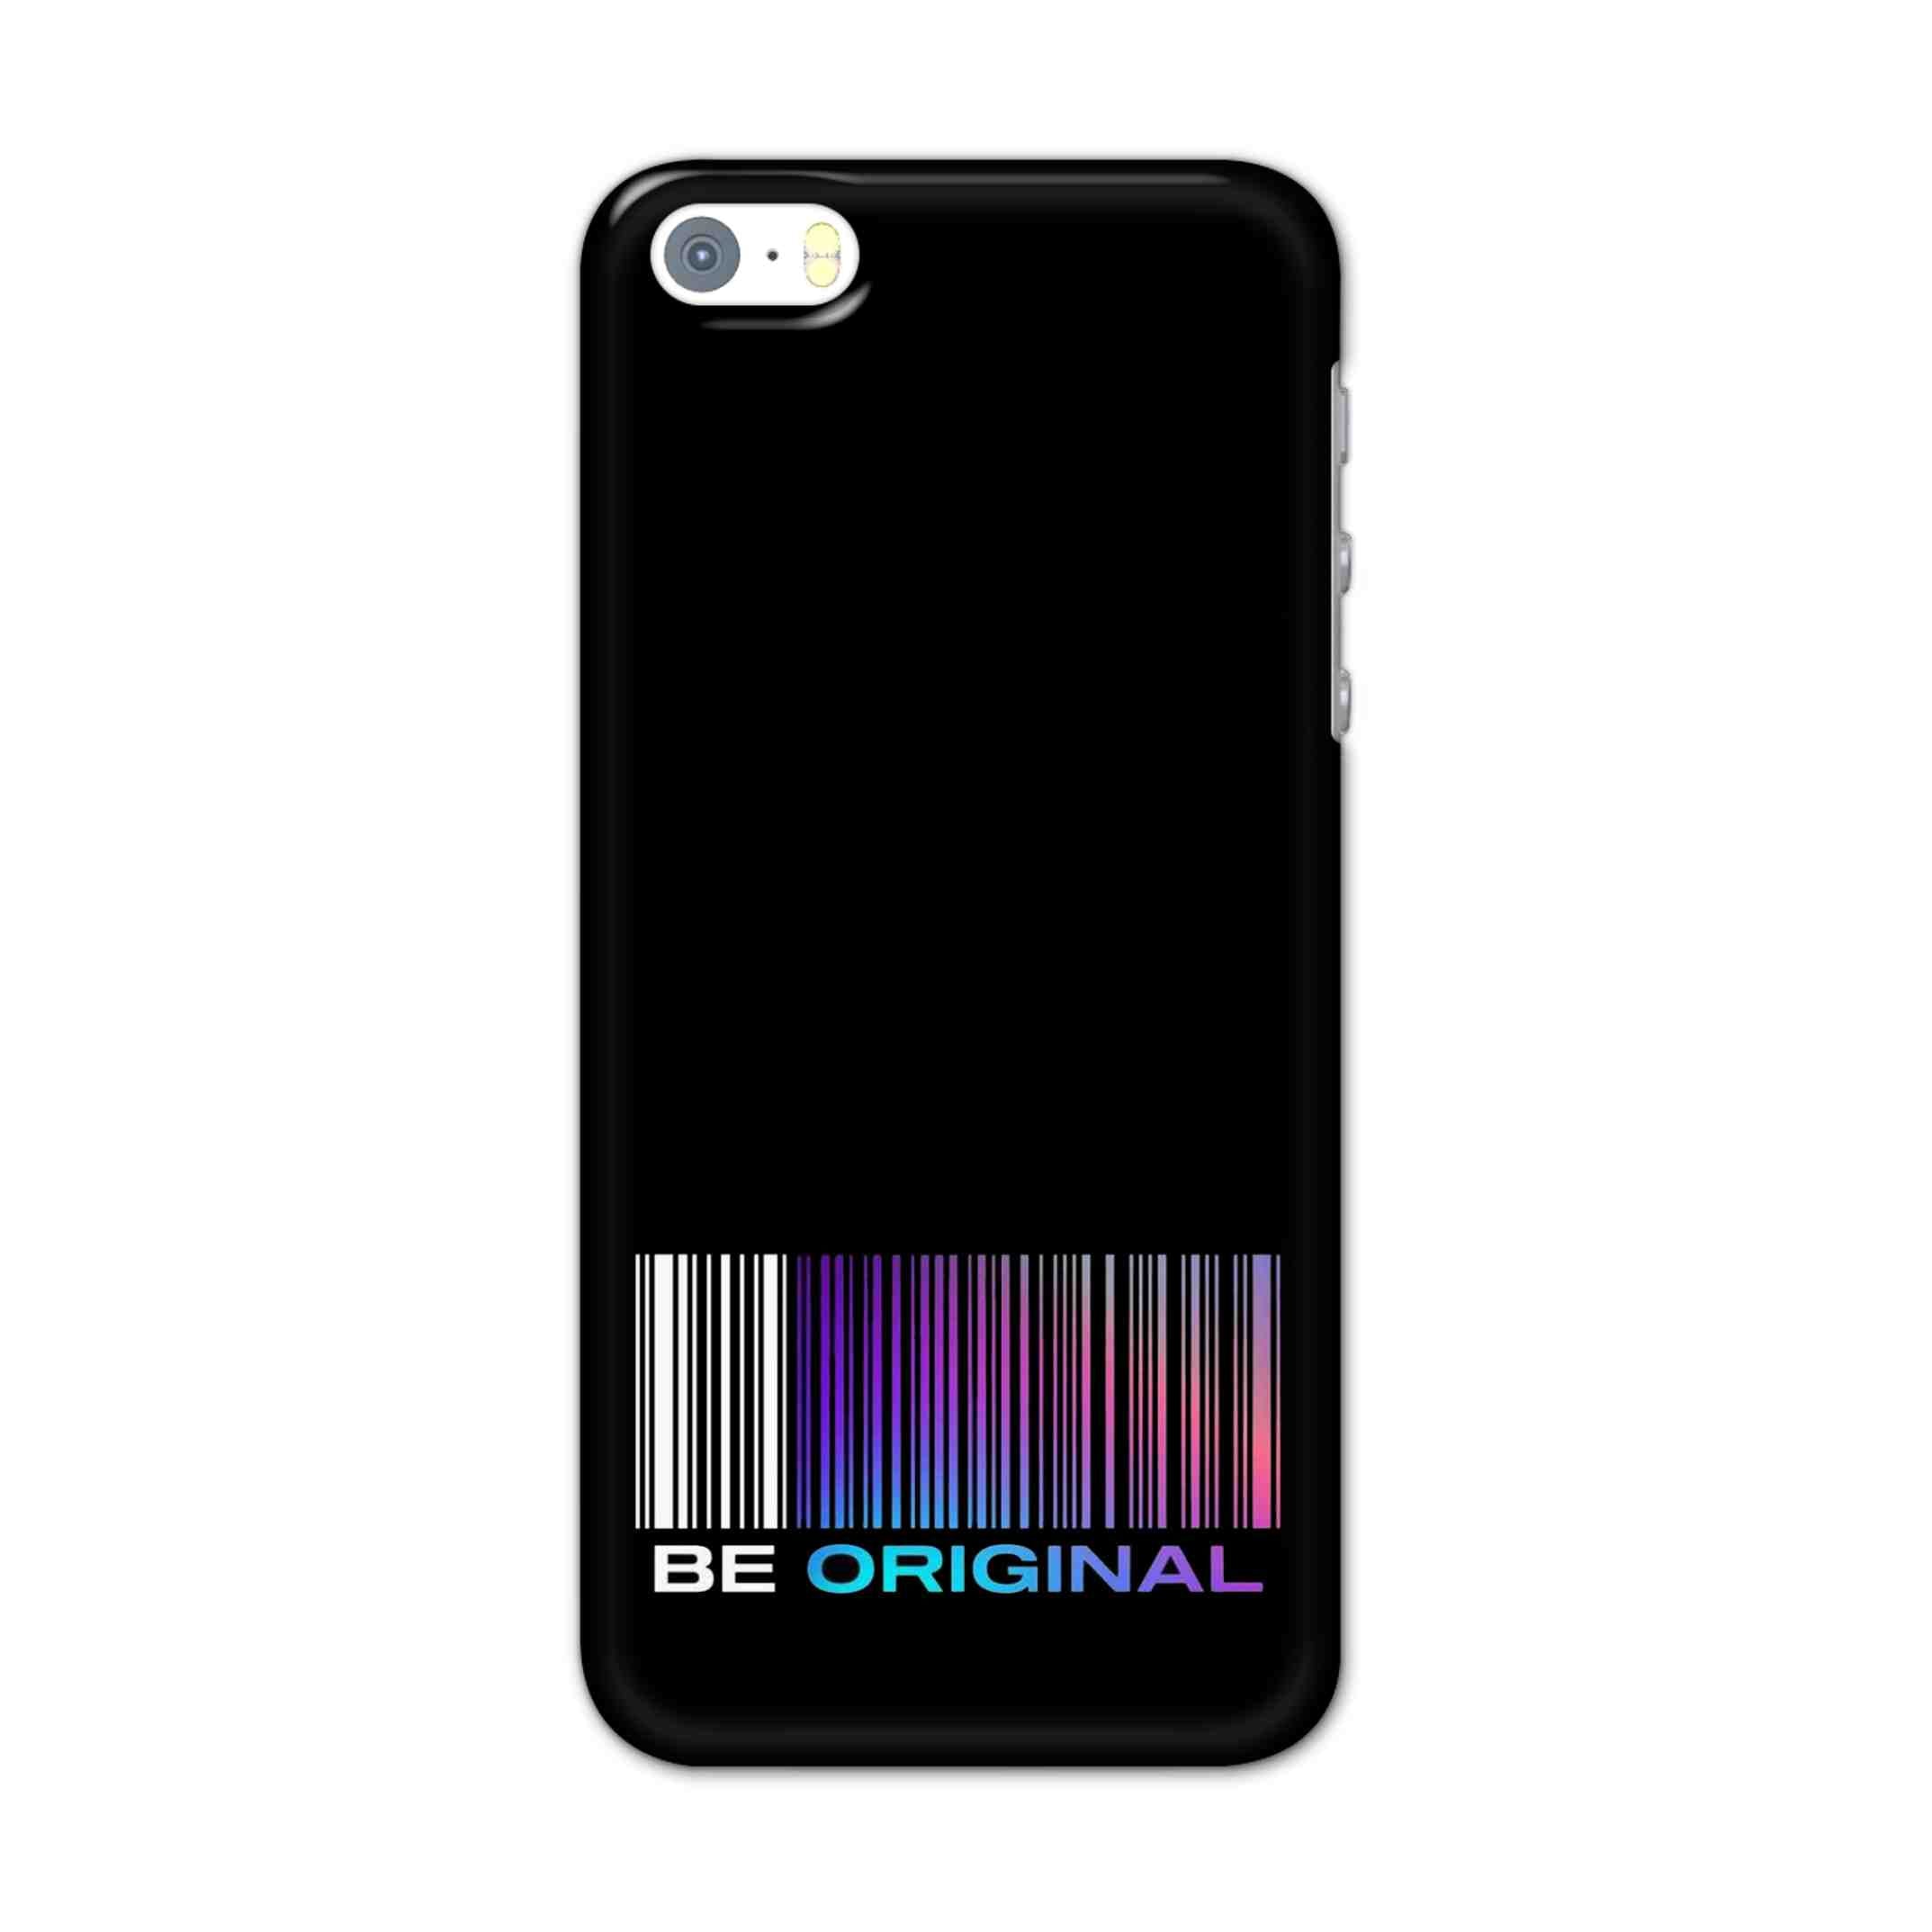 Buy Be Original Hard Back Mobile Phone Case/Cover For Apple Iphone SE Online